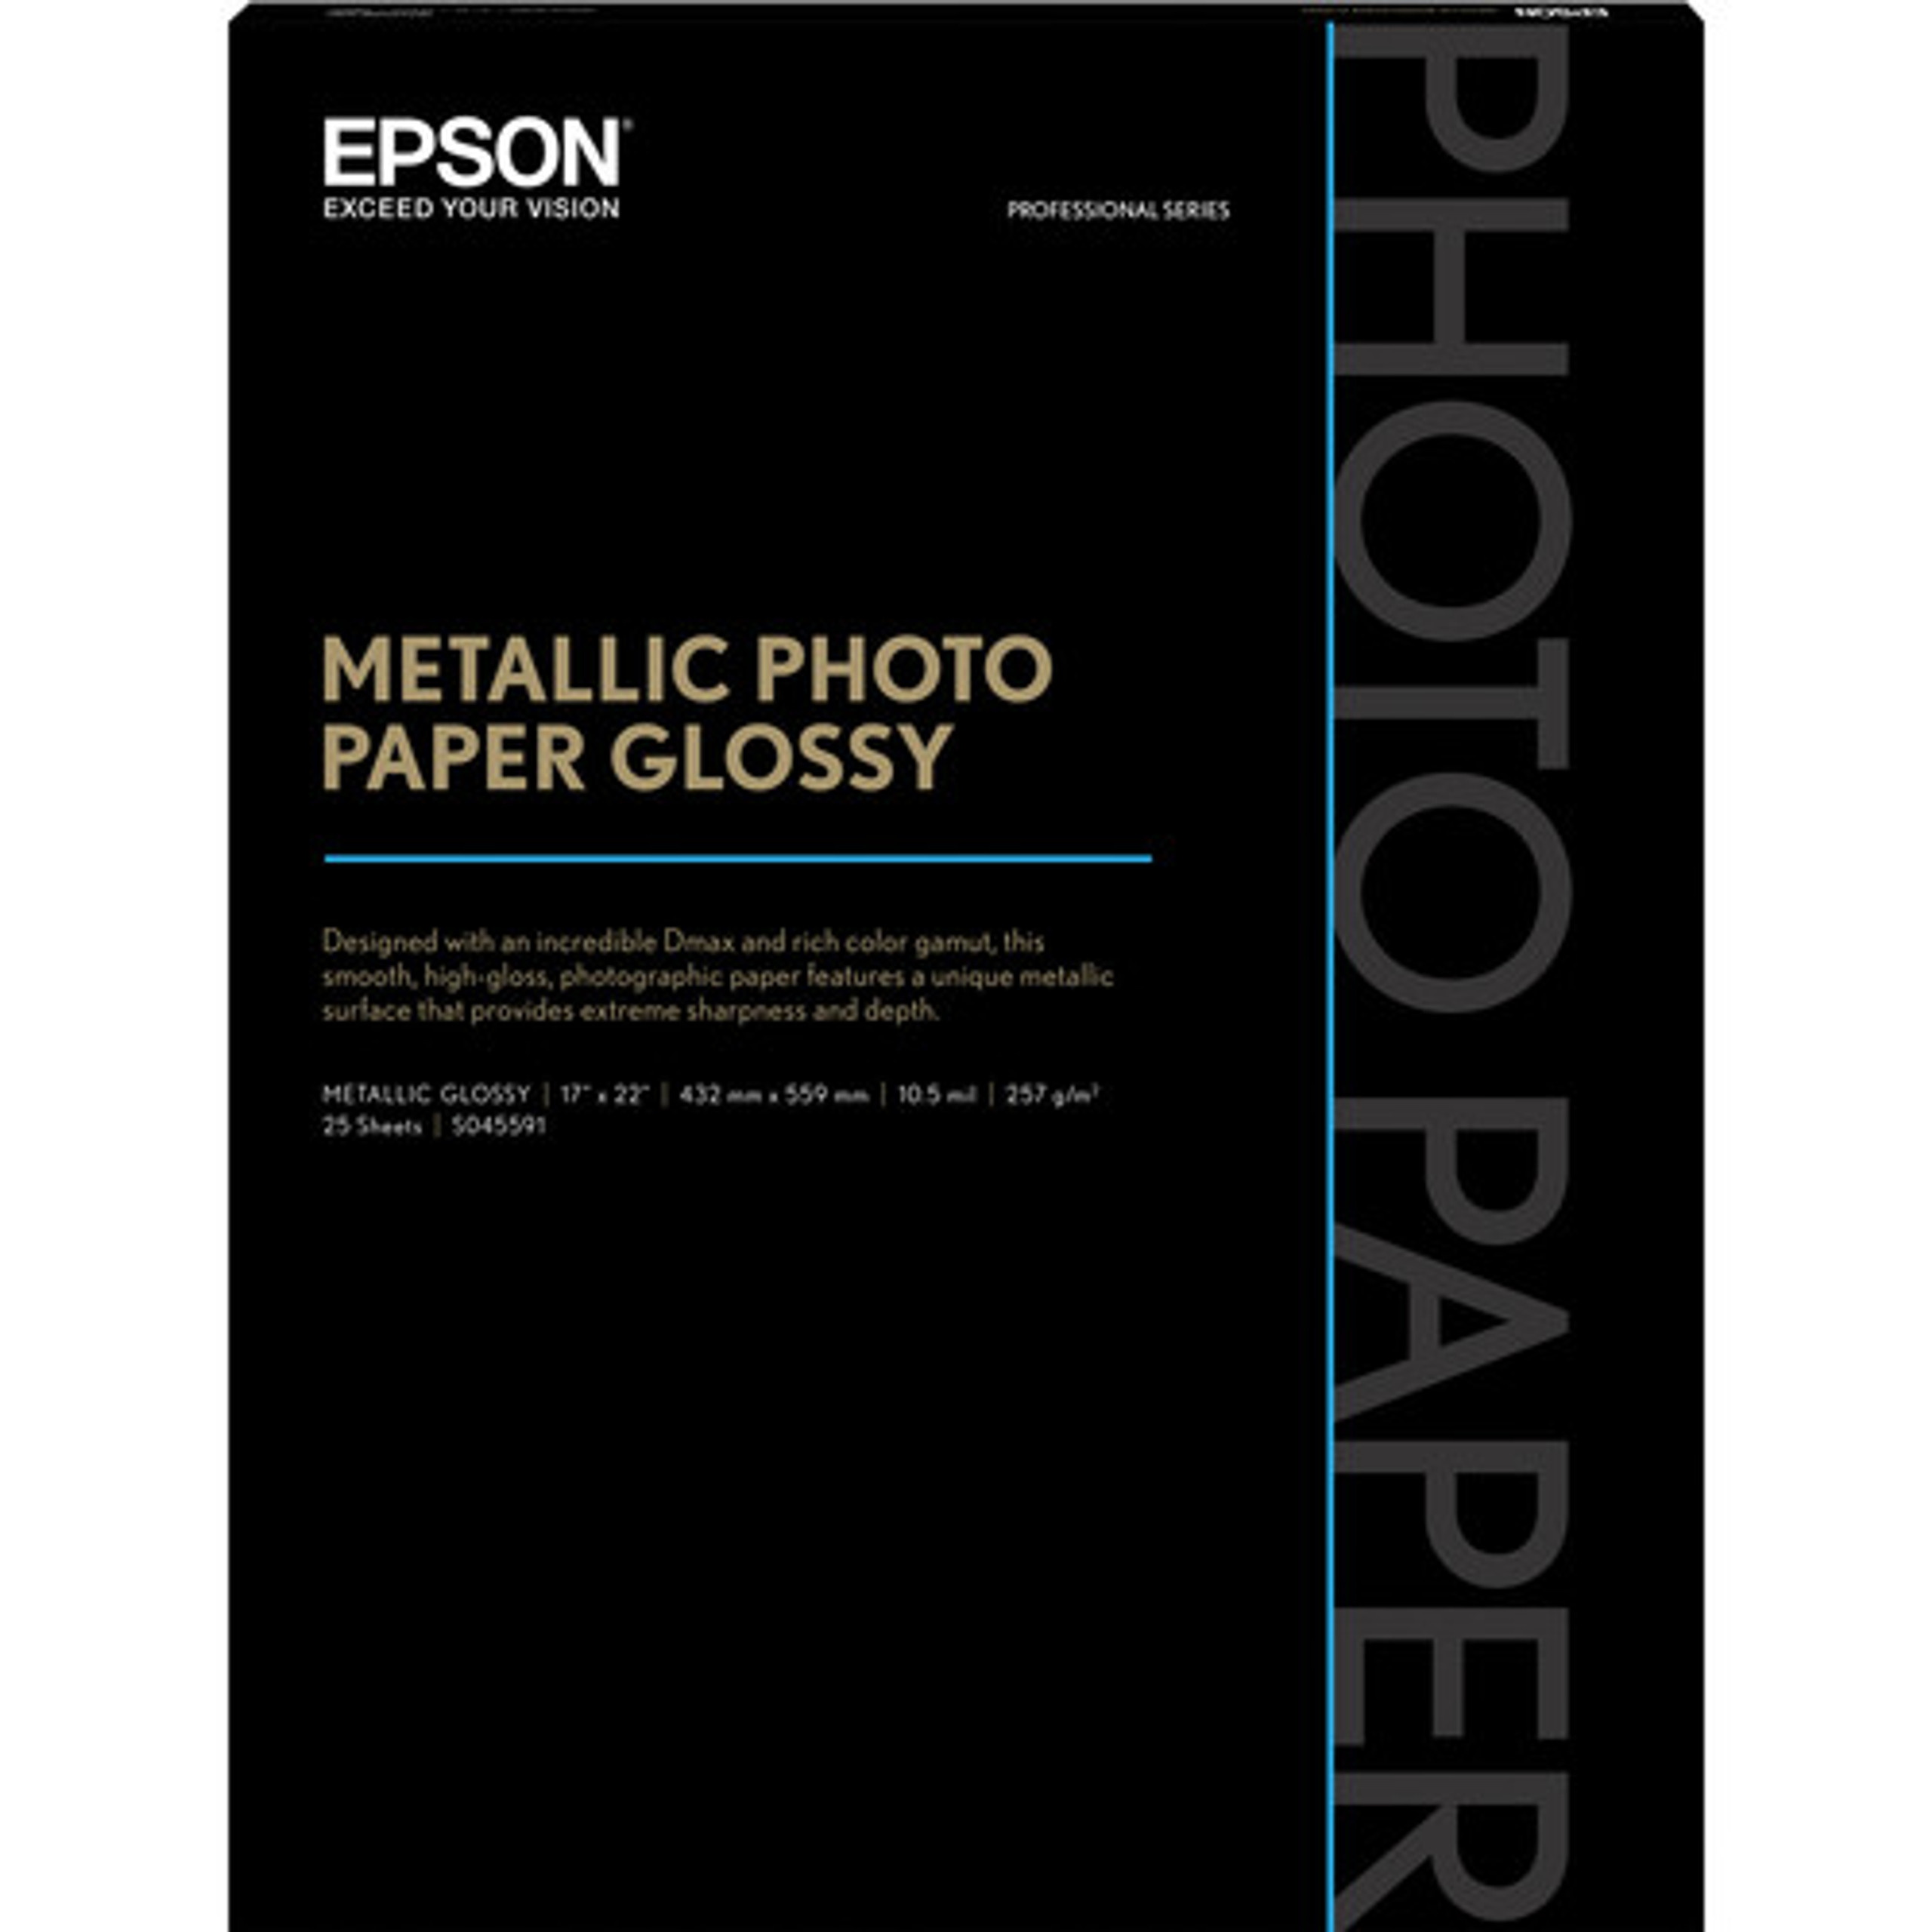 Epson Metallic Photo Paper Glossy 13x19 25 Sheets 3671